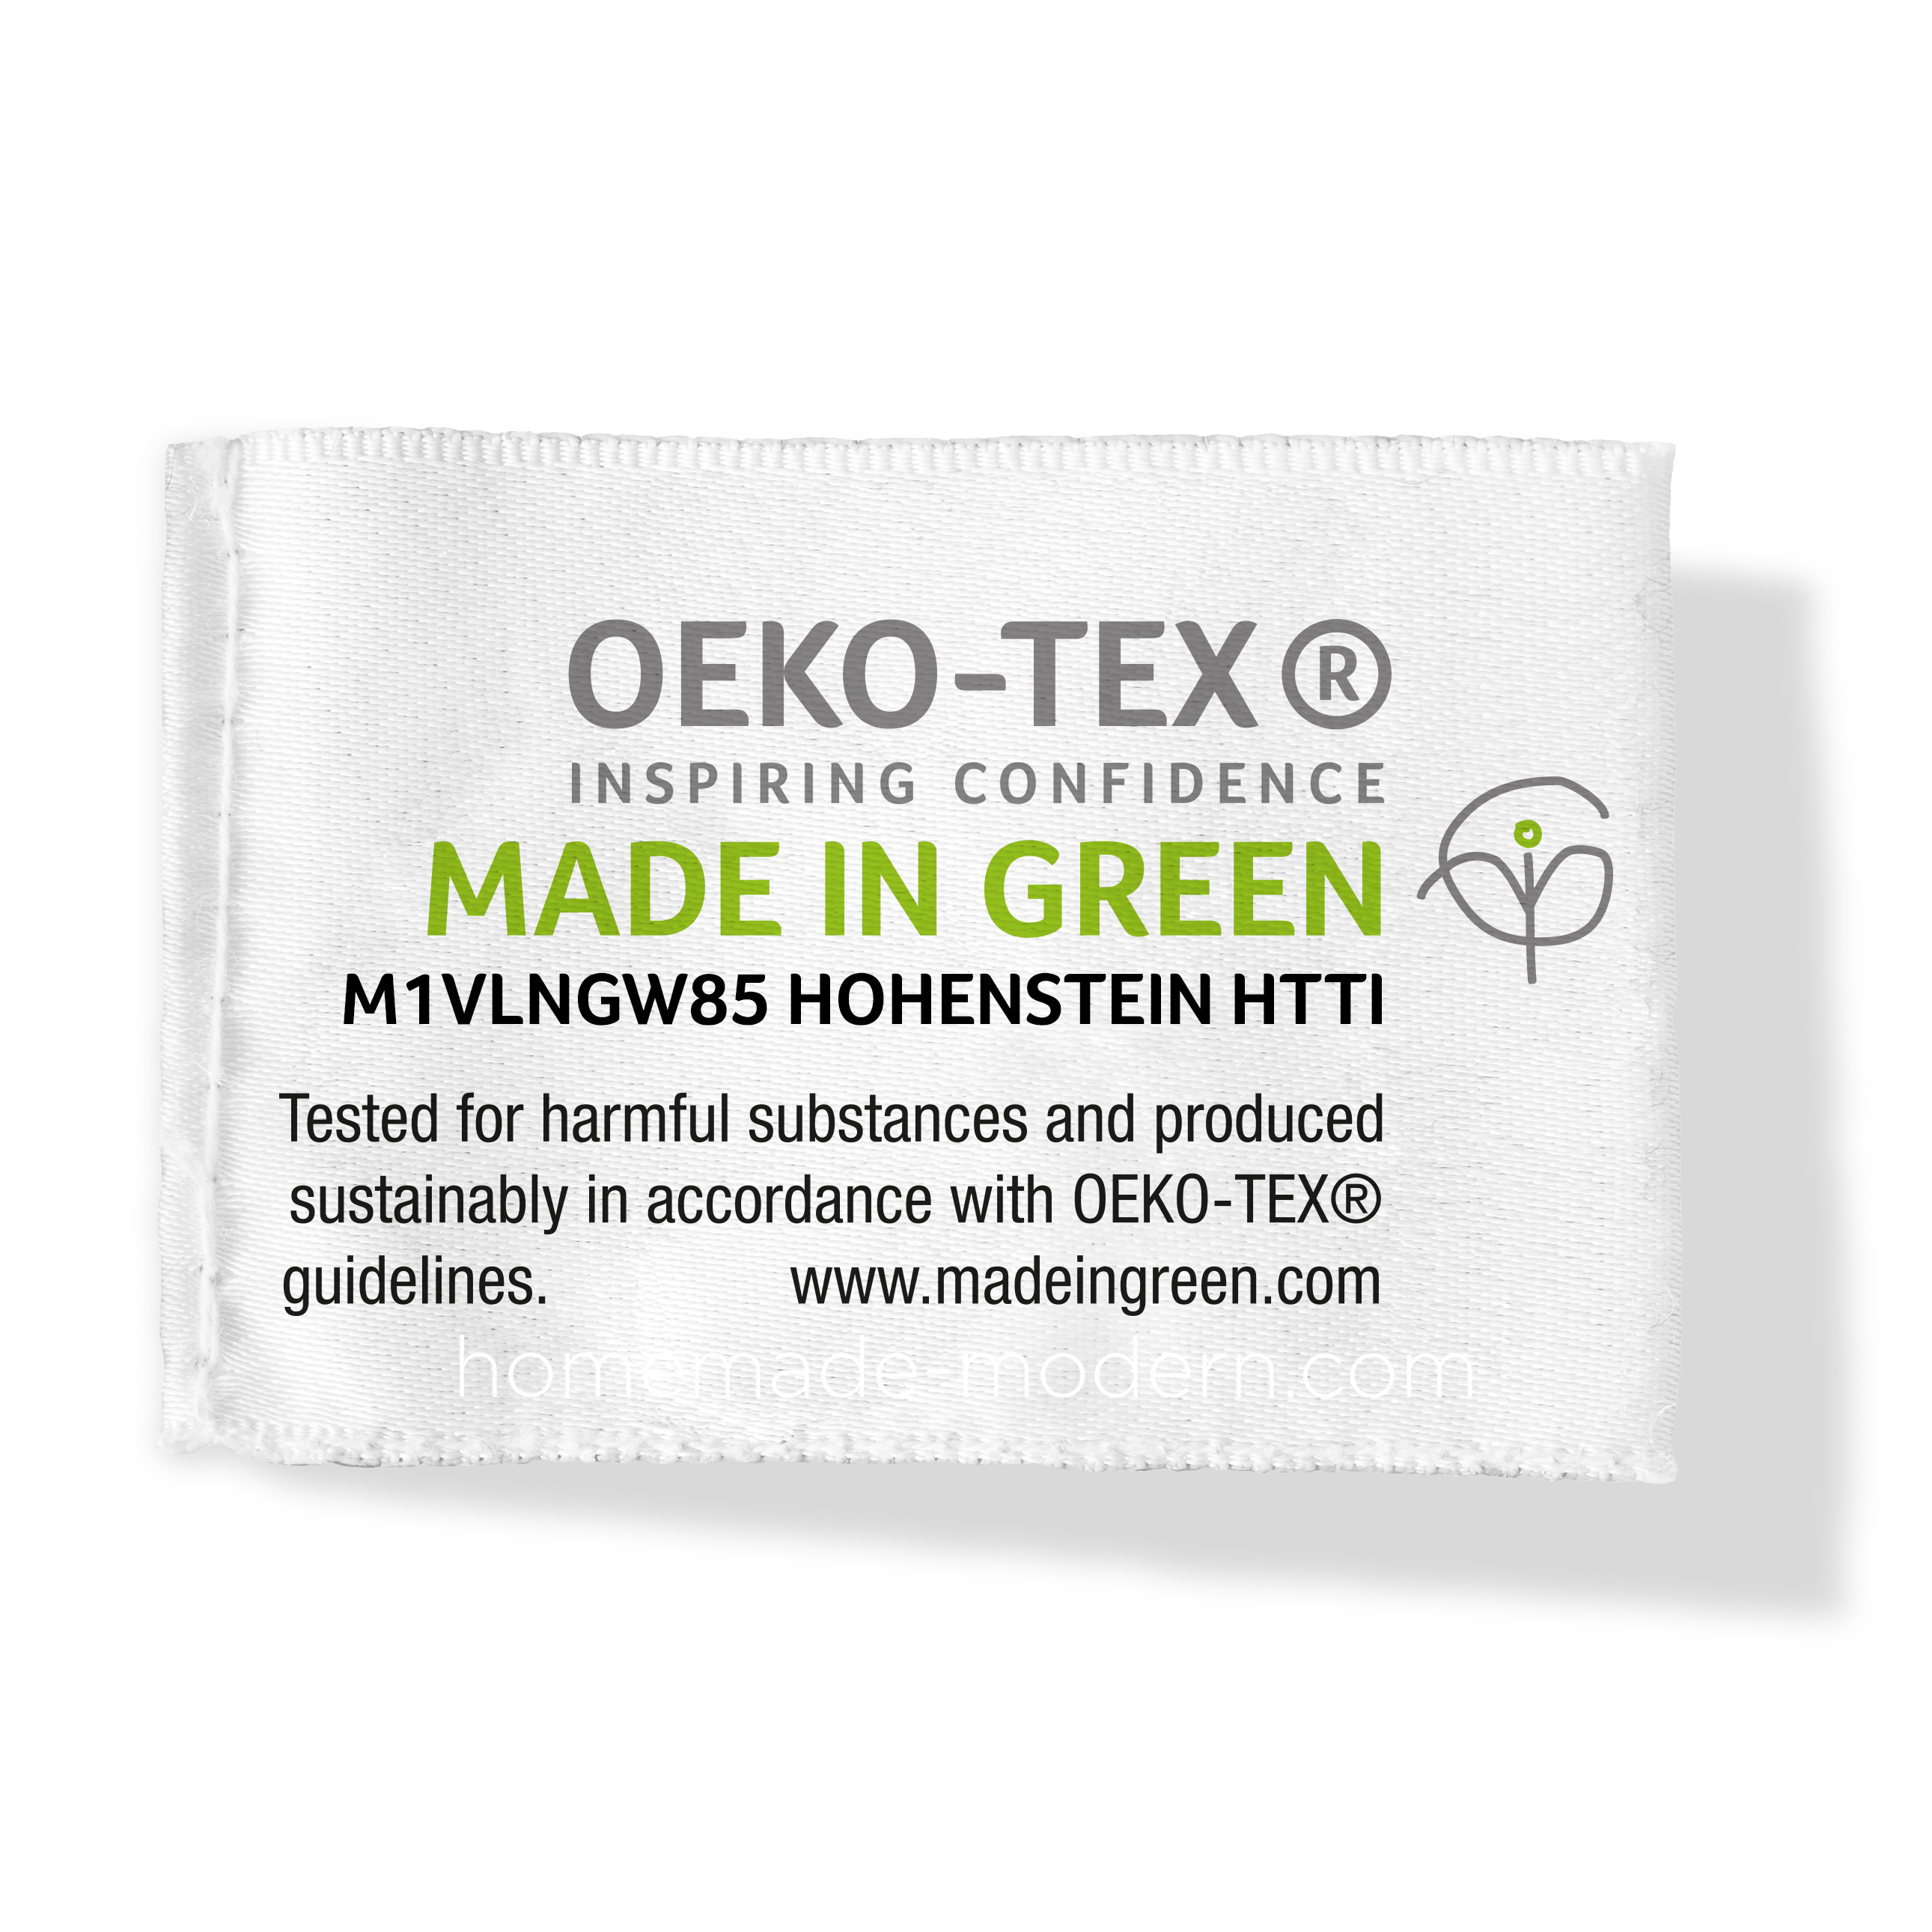 Oeko-Tex expands 'sustainability' label